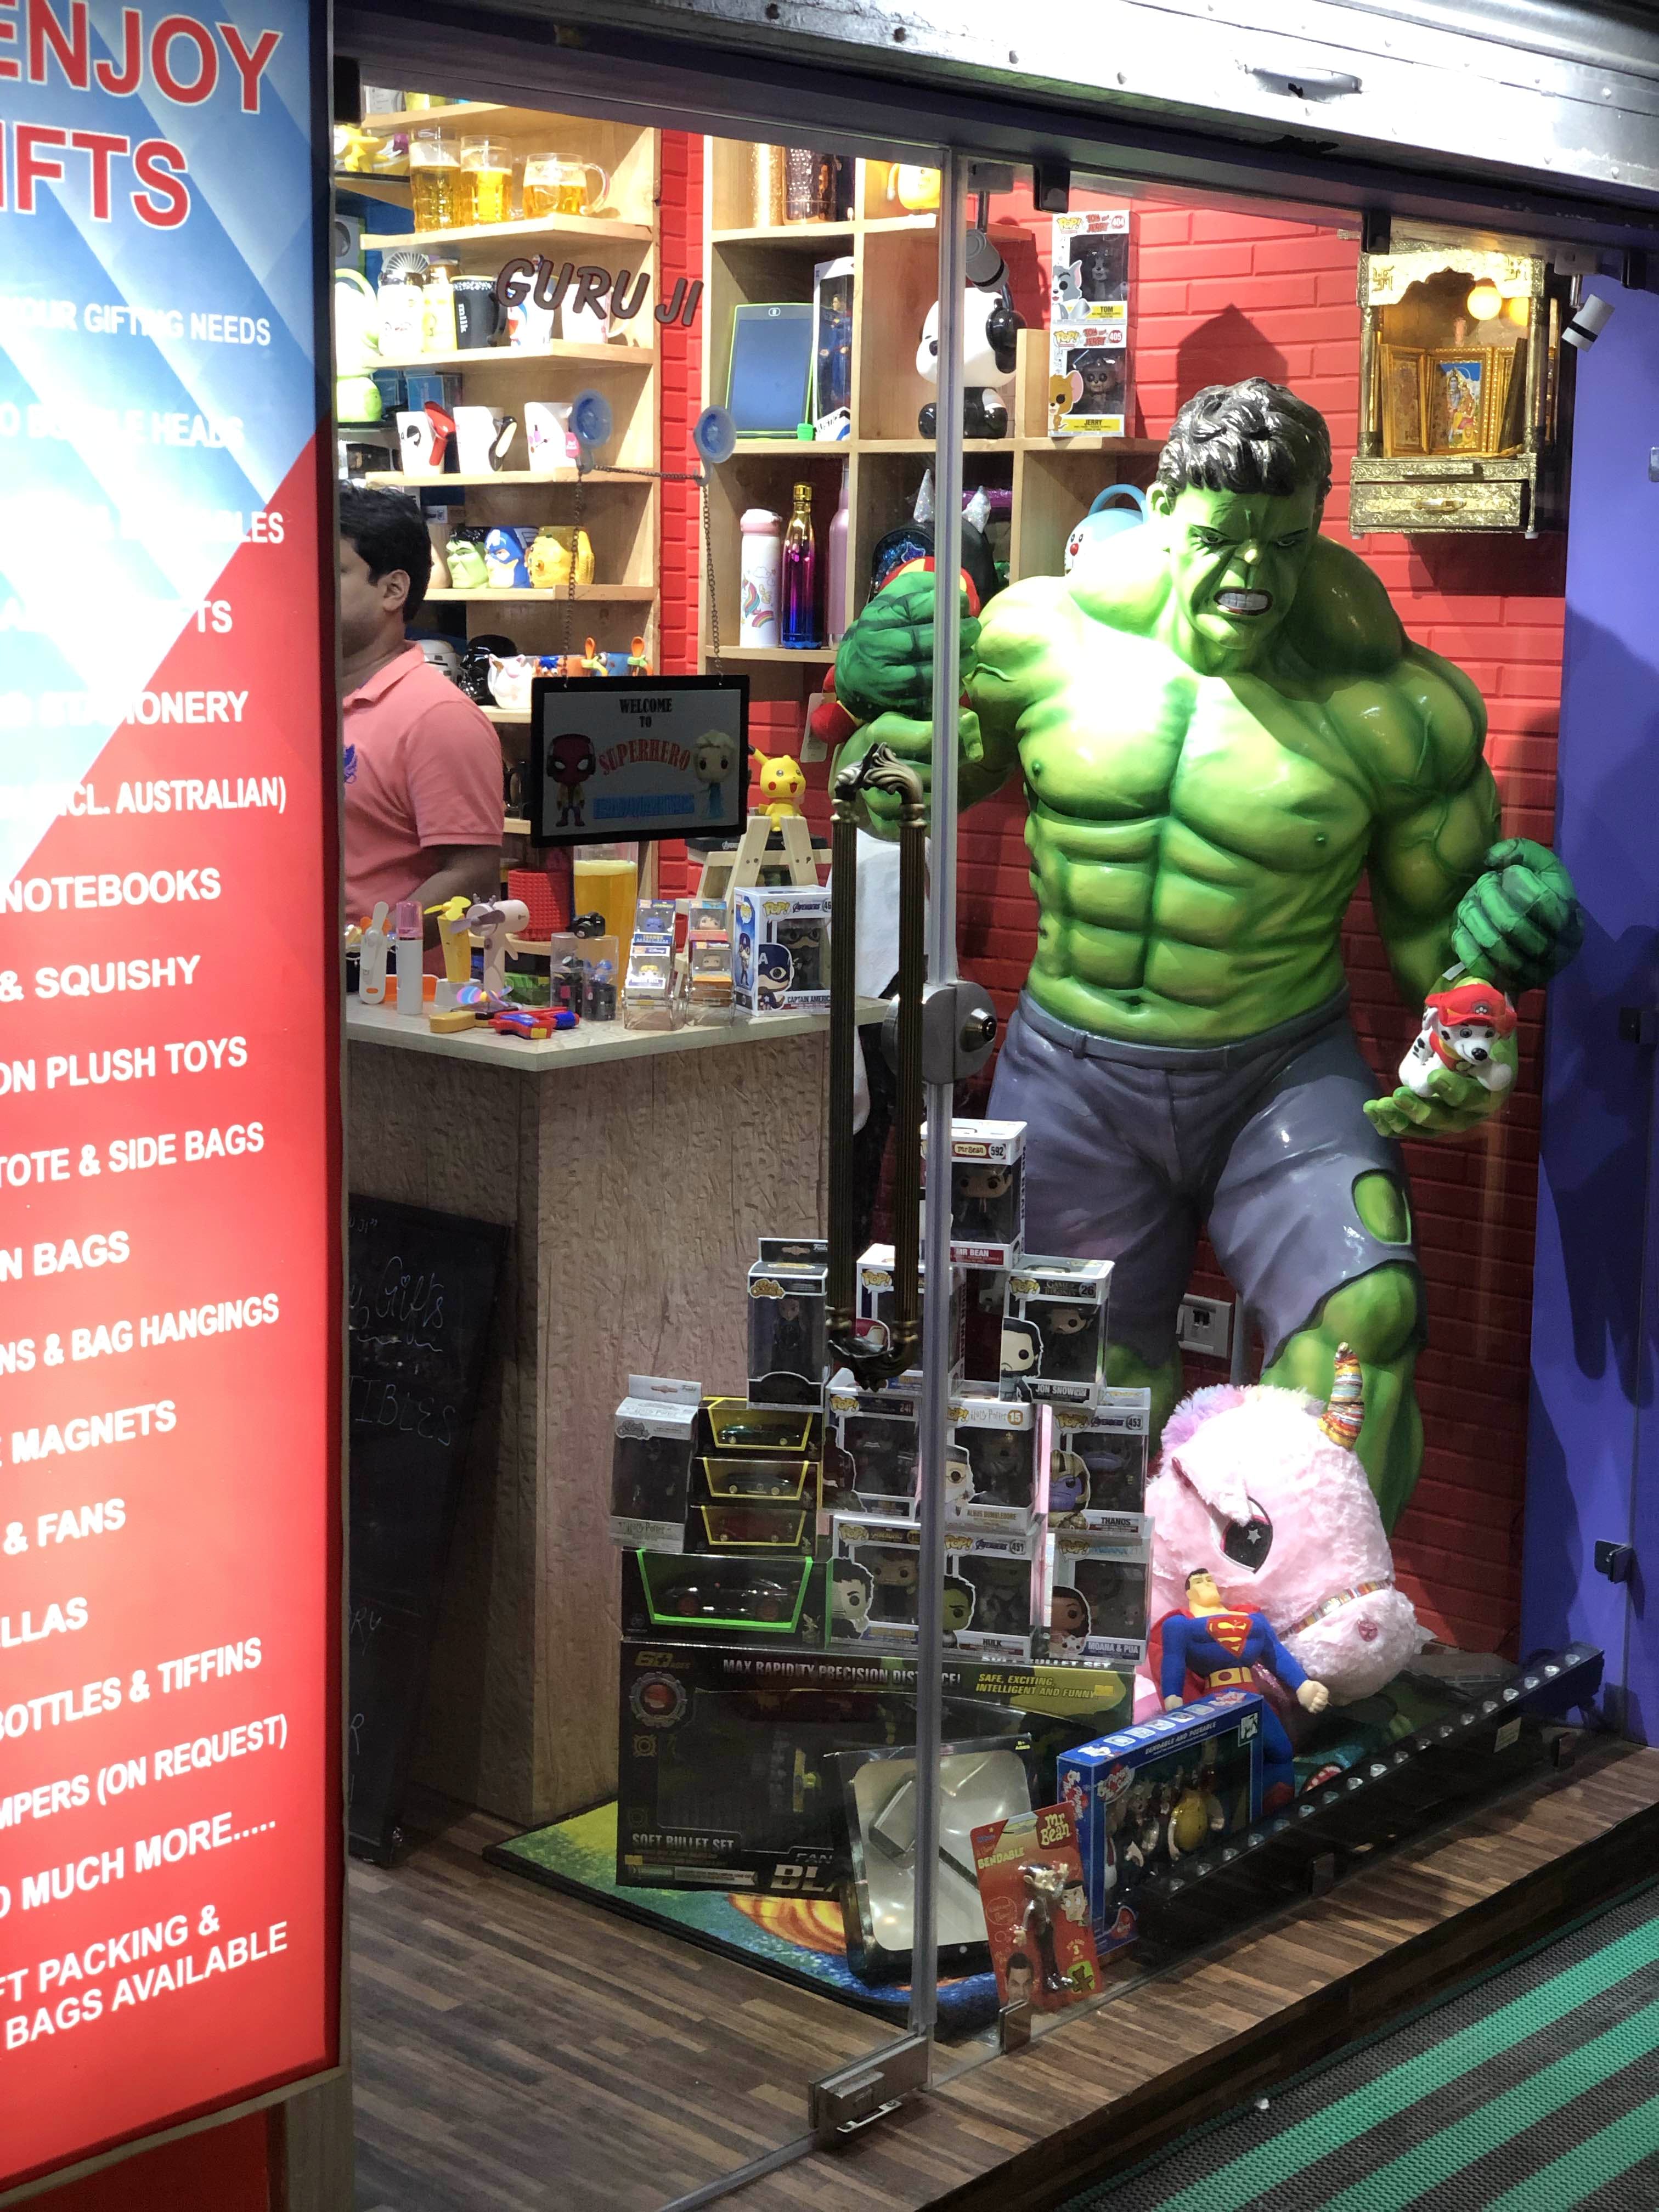 Hulk,Superhero,Fictional character,Toy,Action figure,Iron man,Hero,Avengers